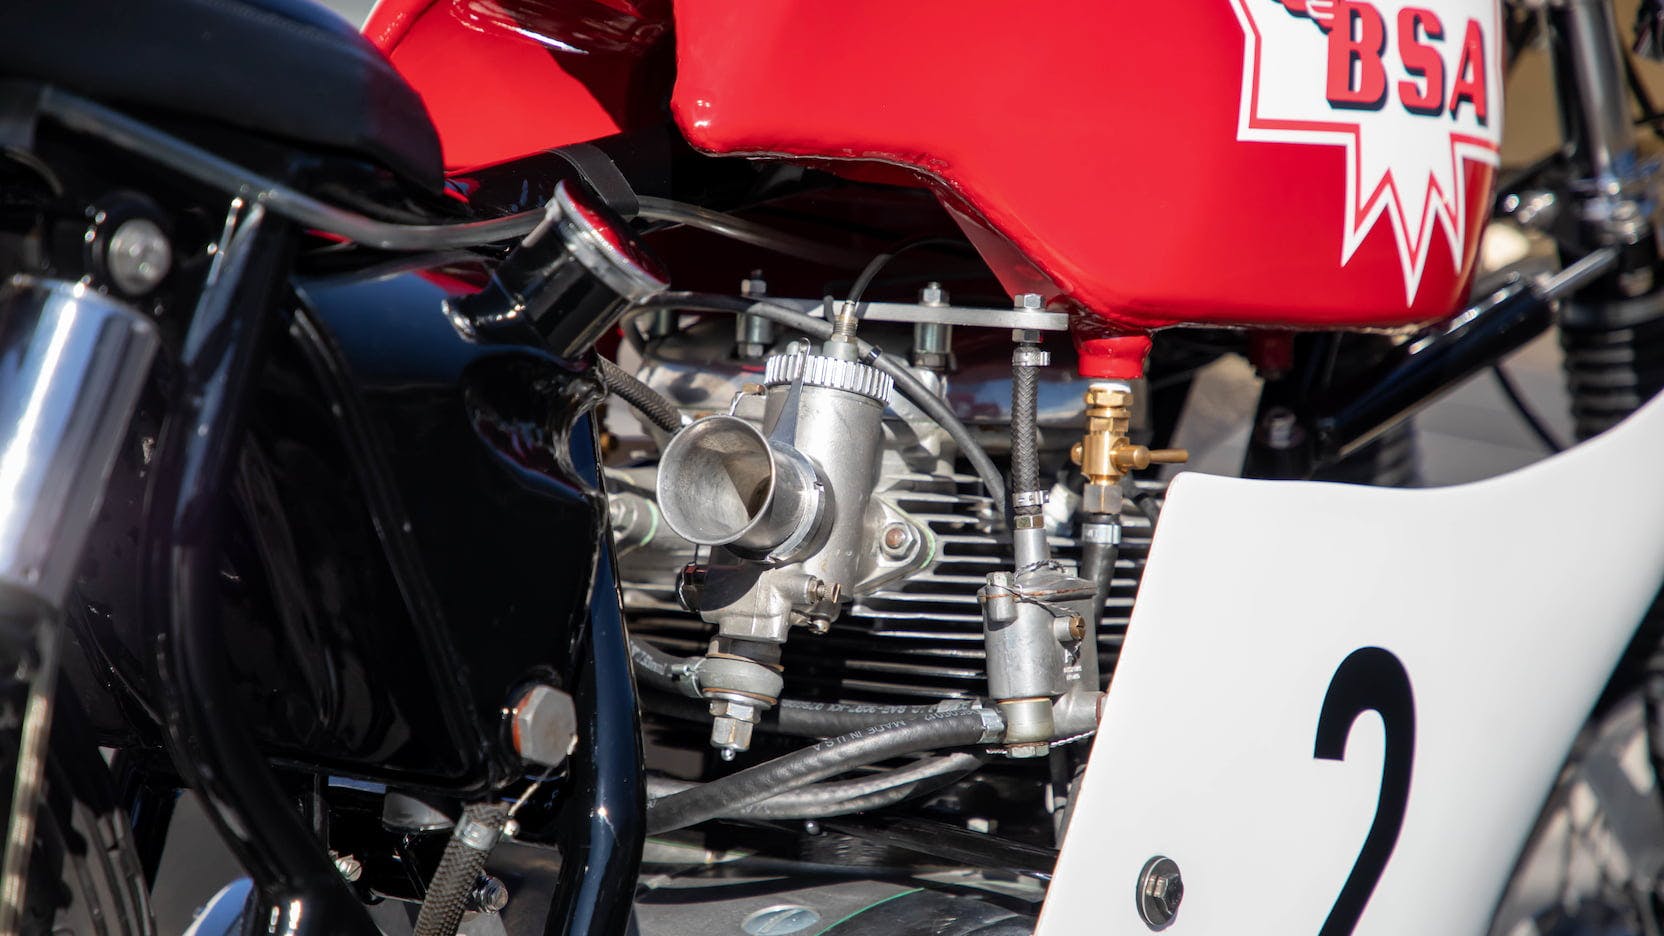 1966 BSA A50 Road Racer engine detail